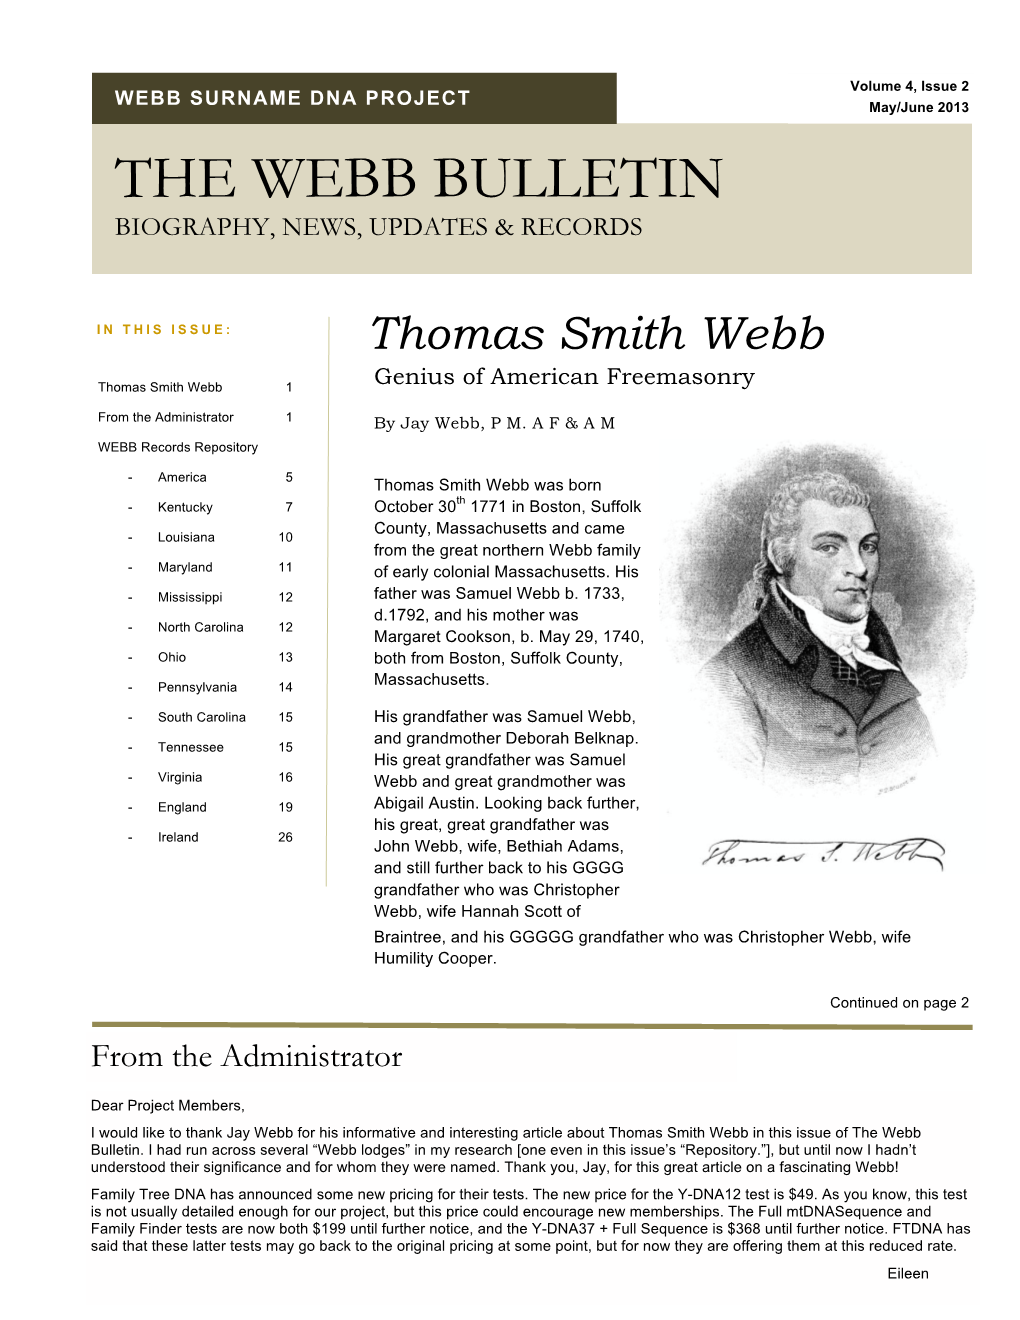 The Webb Bulletin Biography, News, Updates & Records